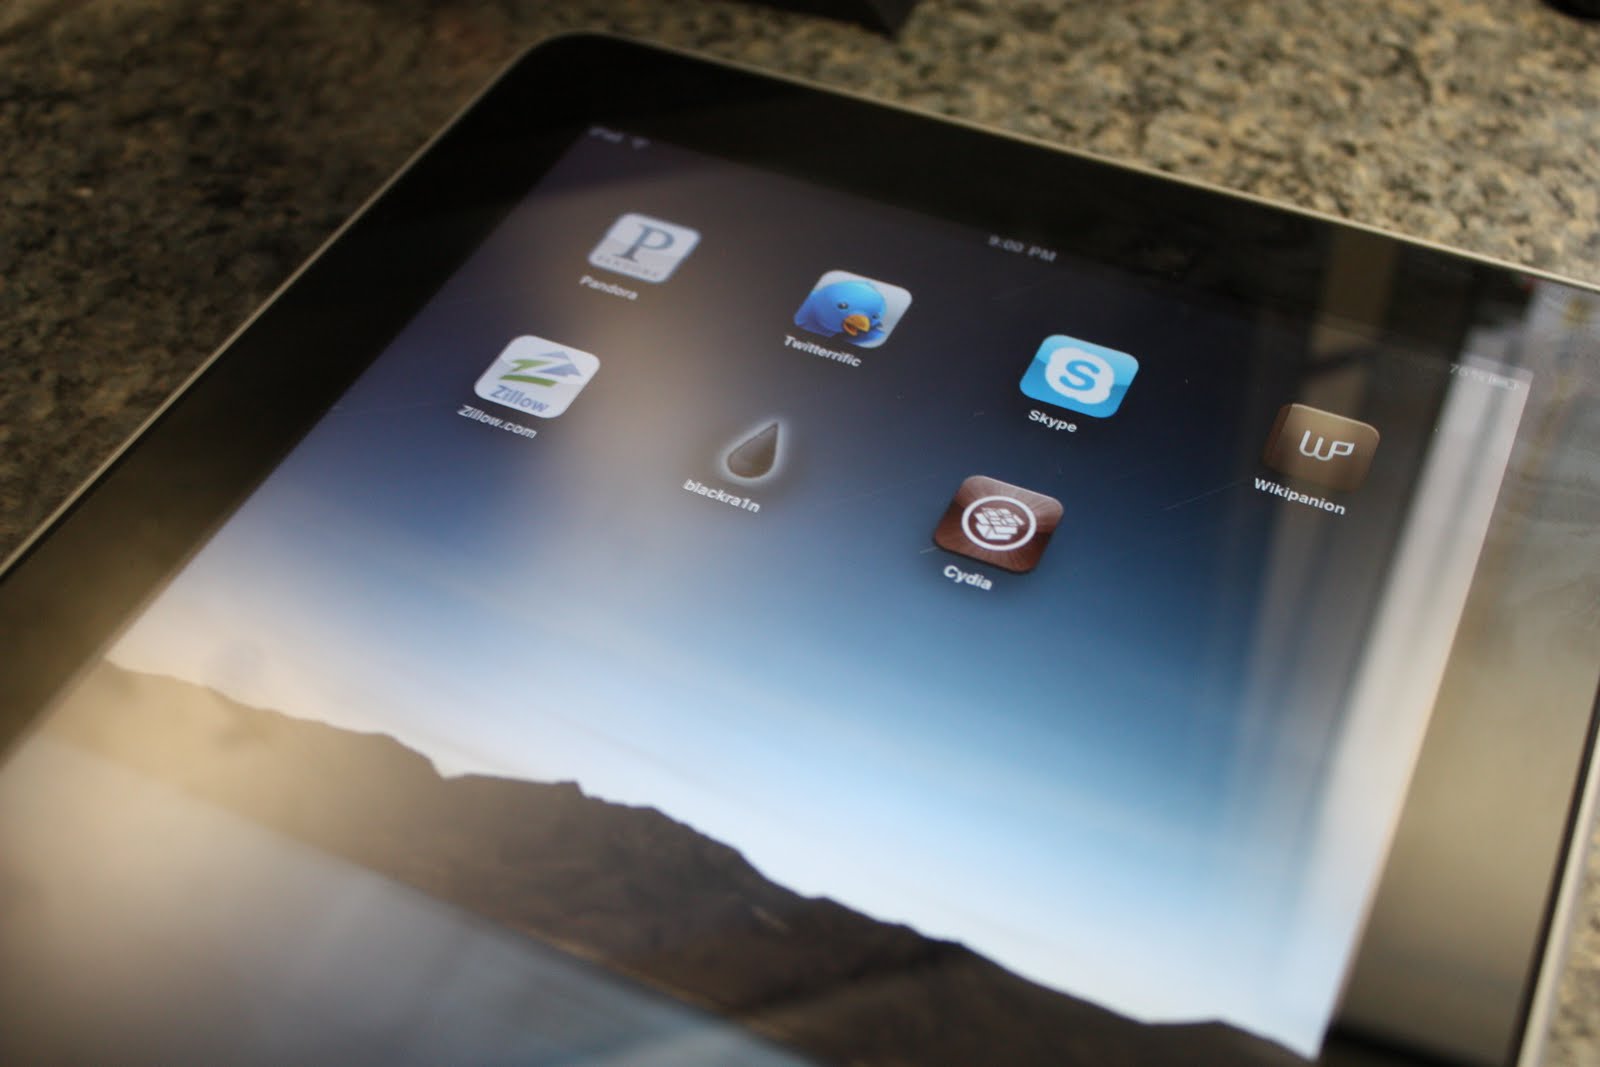 iPad jailbroken with Spirit (updated)